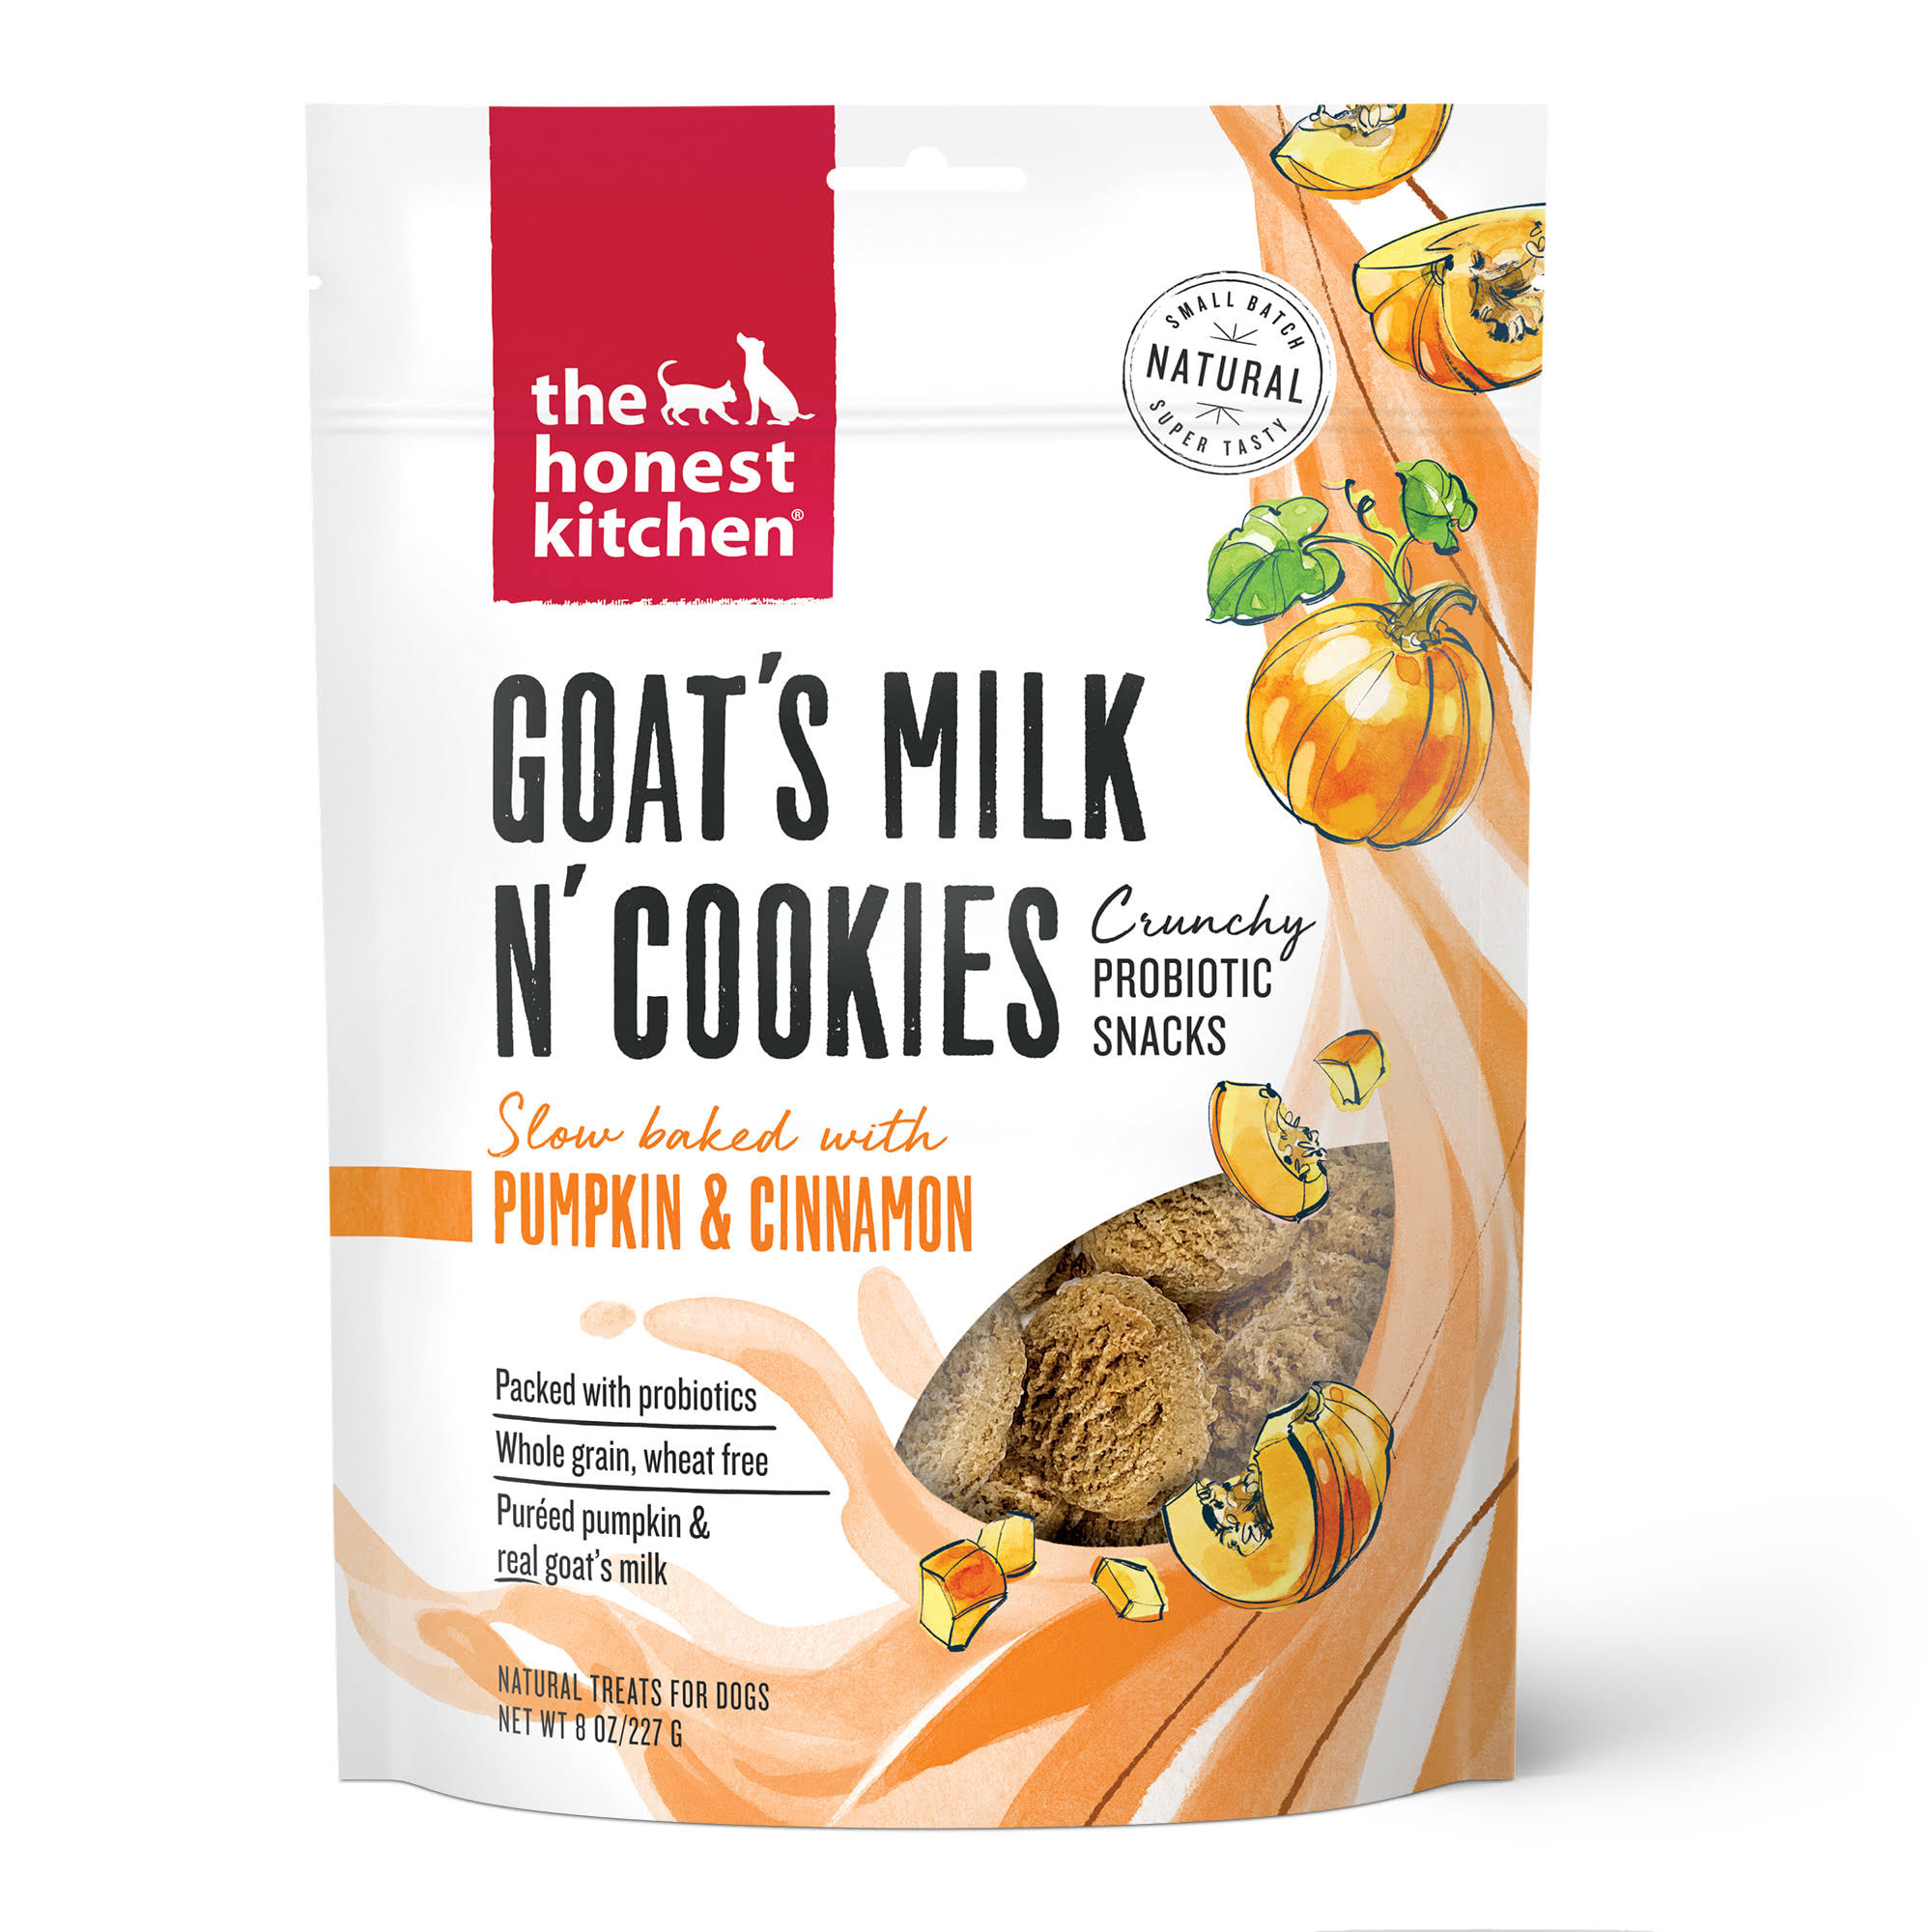 The Honest Kitchen Goat's Milk N' Cookies: Slow Baked with Pumpkin, 8 oz Bag